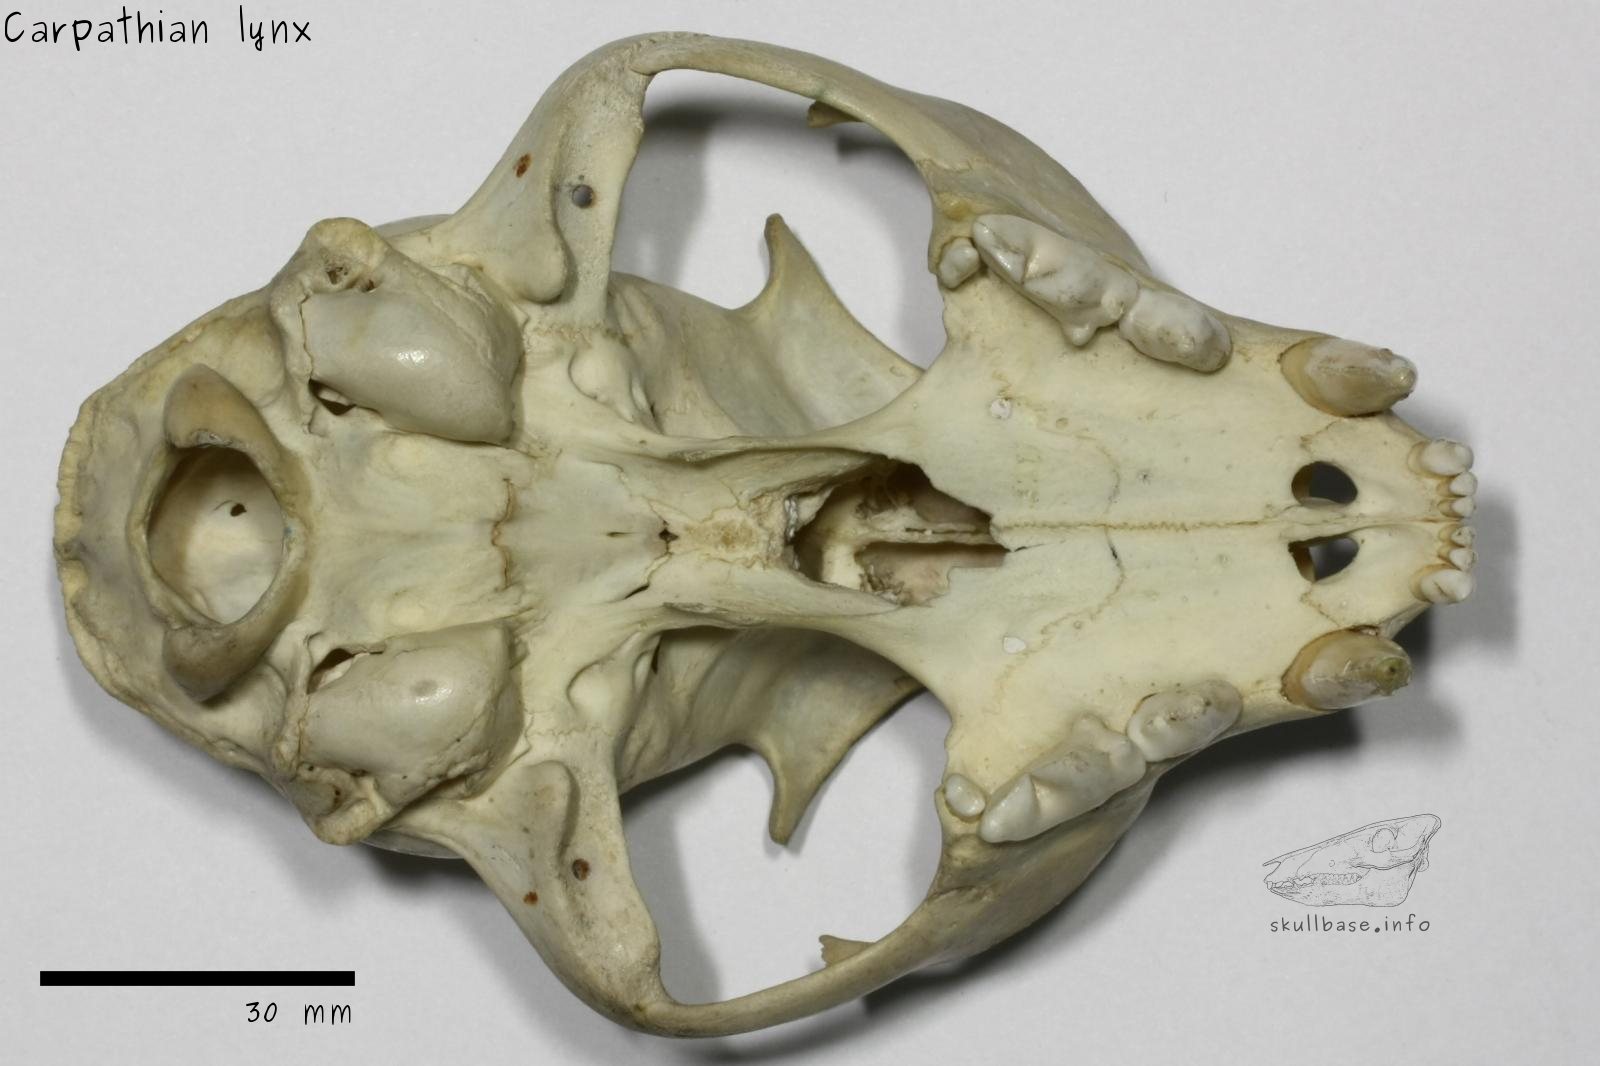 Carpathian lynx (Lynx lynx carpathicus) skull ventral view